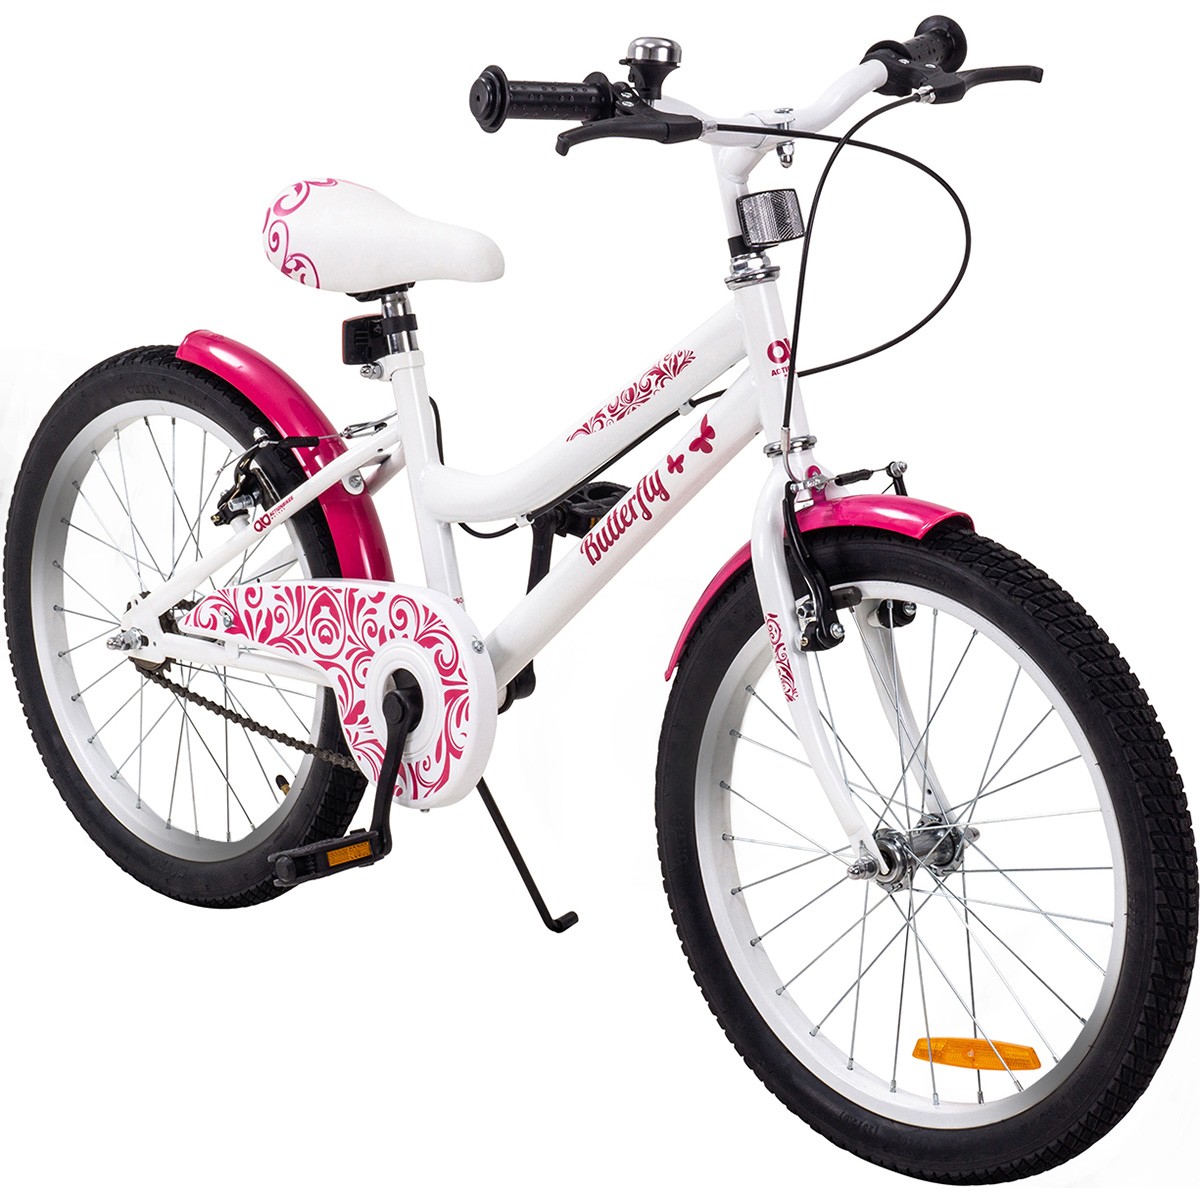 01-kinderfahrrad-20-zoll-weiss-pink-actionbikes-motors-butterfly-startbild